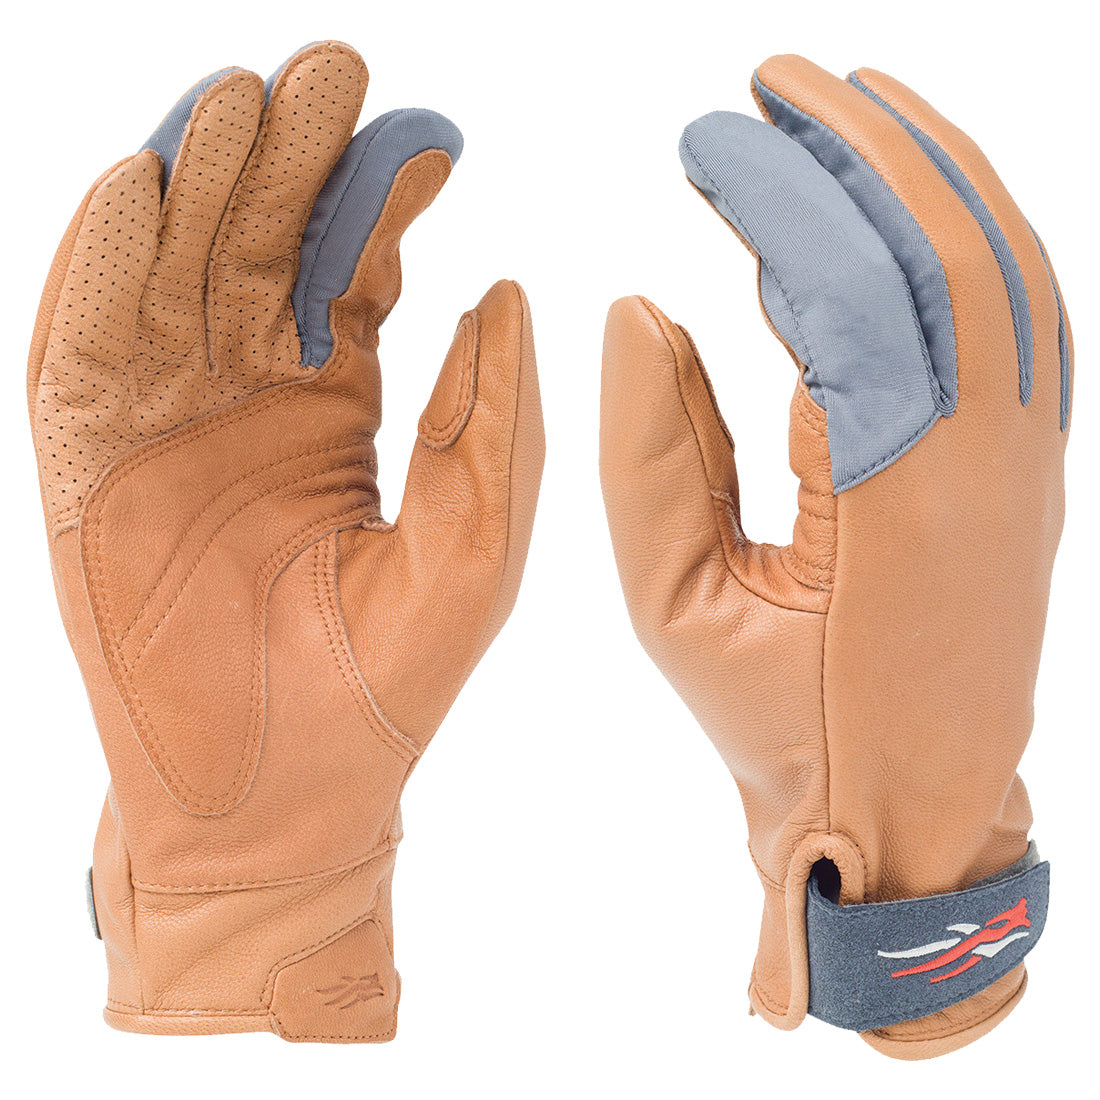 Sitka Gunner Windstopper Glove - Men's